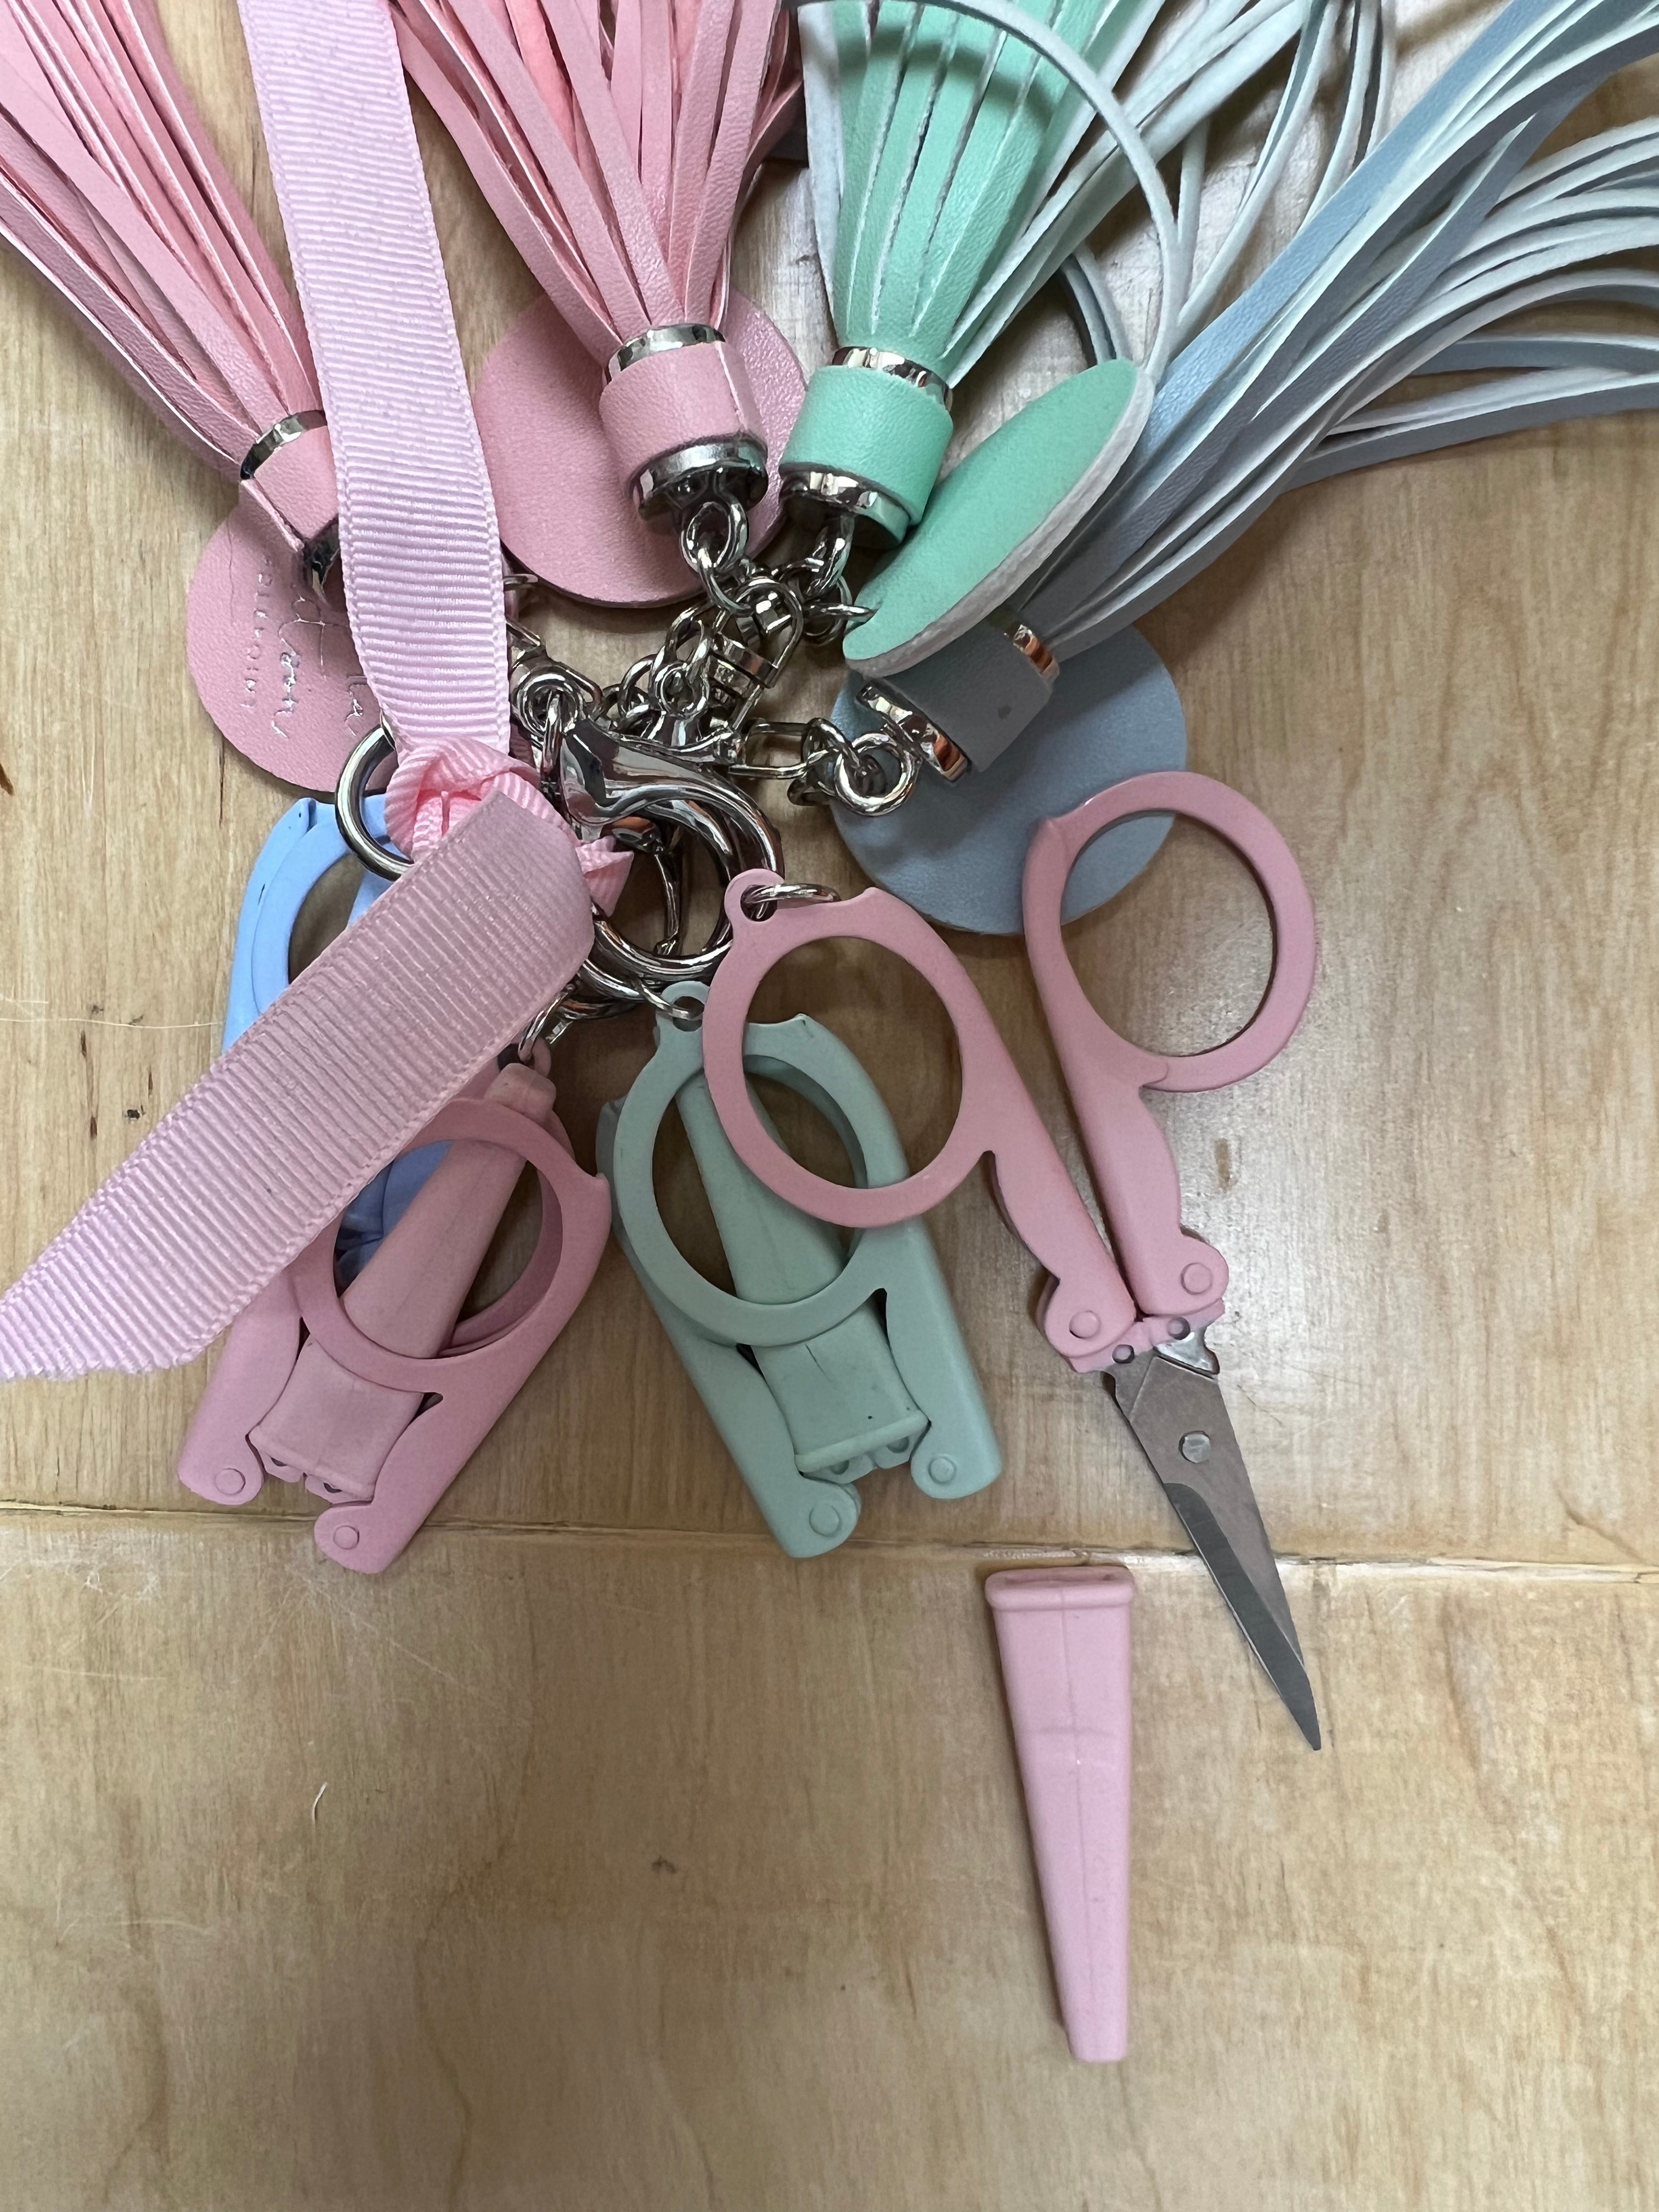 Cotton Candy scissors